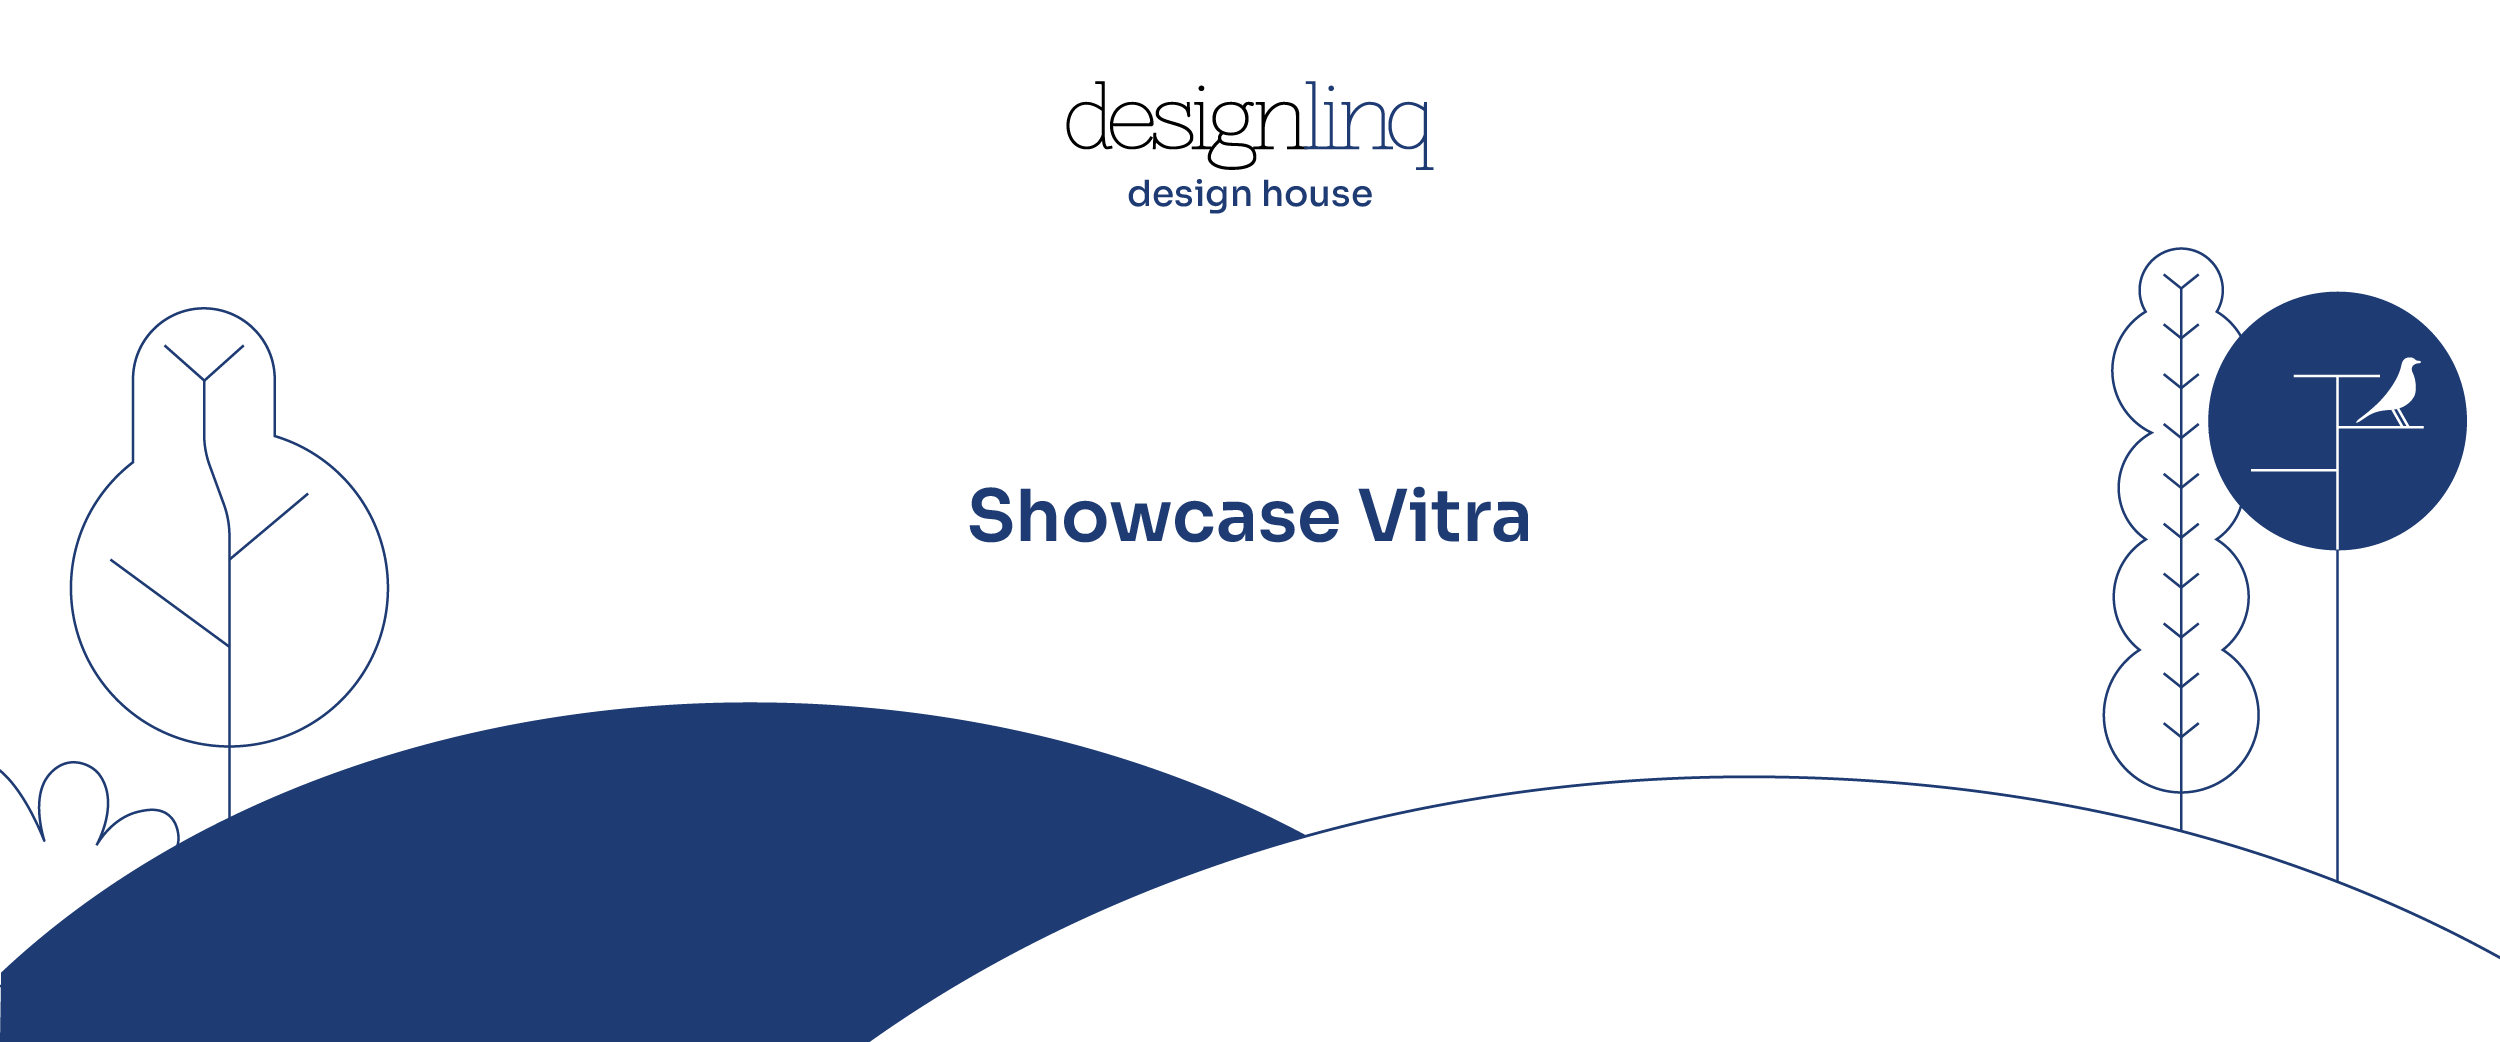 Showcase Vitra